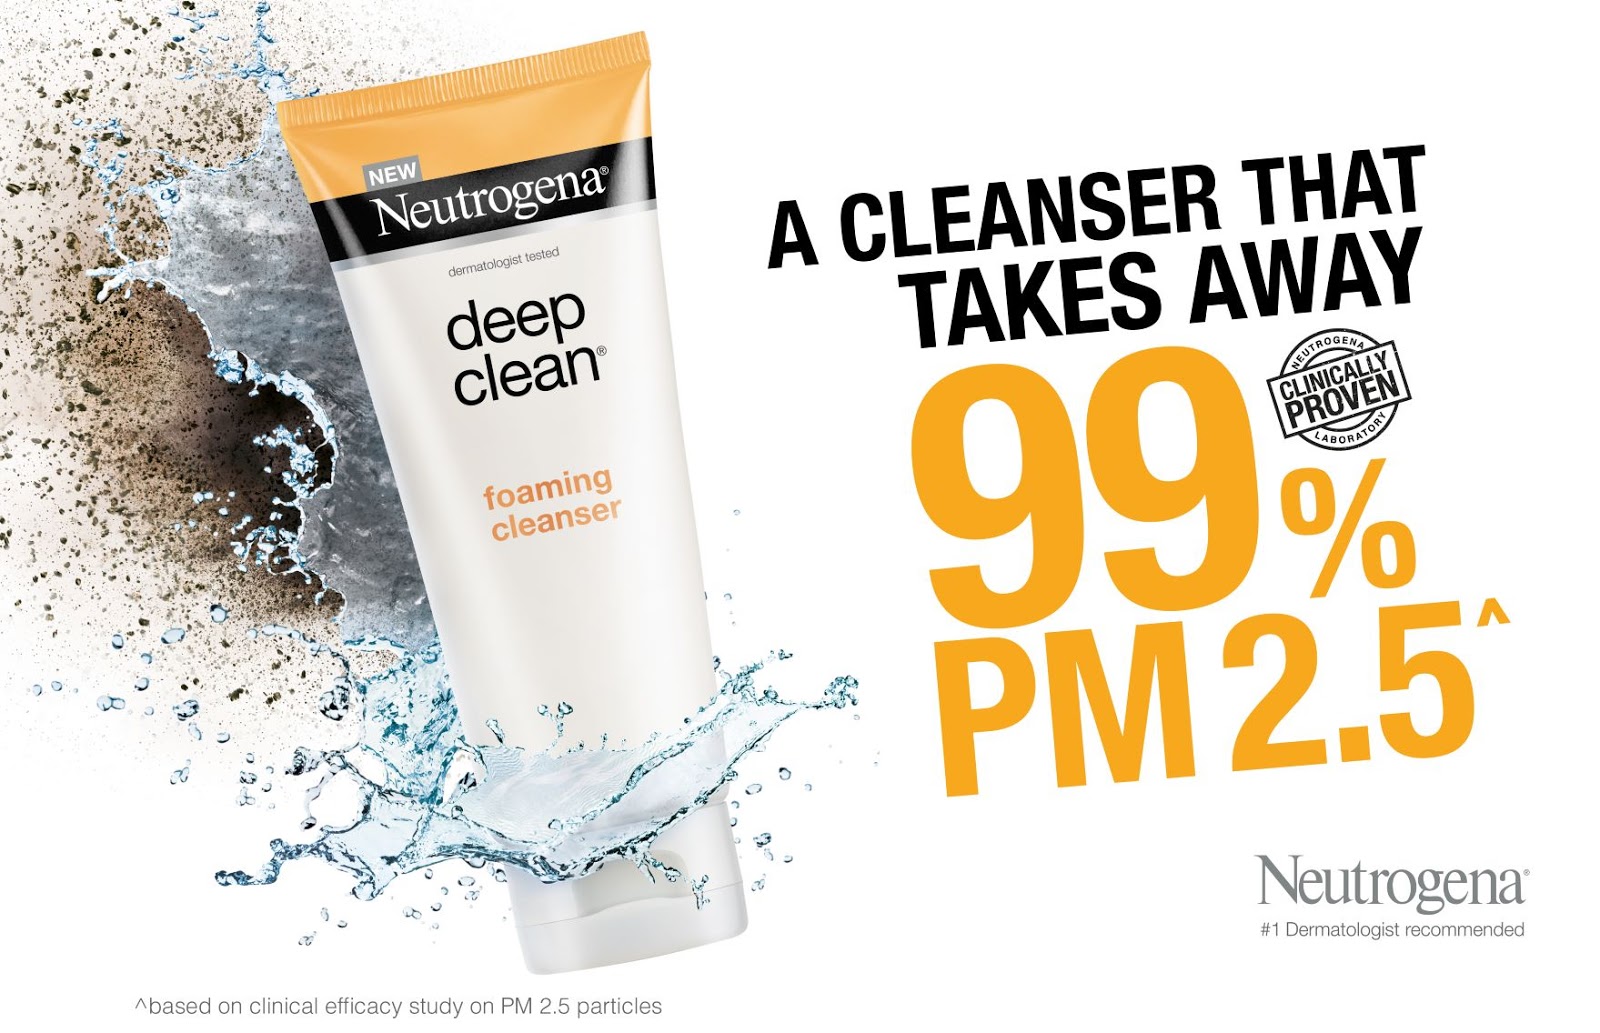 Pure deep cleansing foam. Neutrogena Foam Cleanser. Neutrogena Foaming Cleanser. Deep clean.